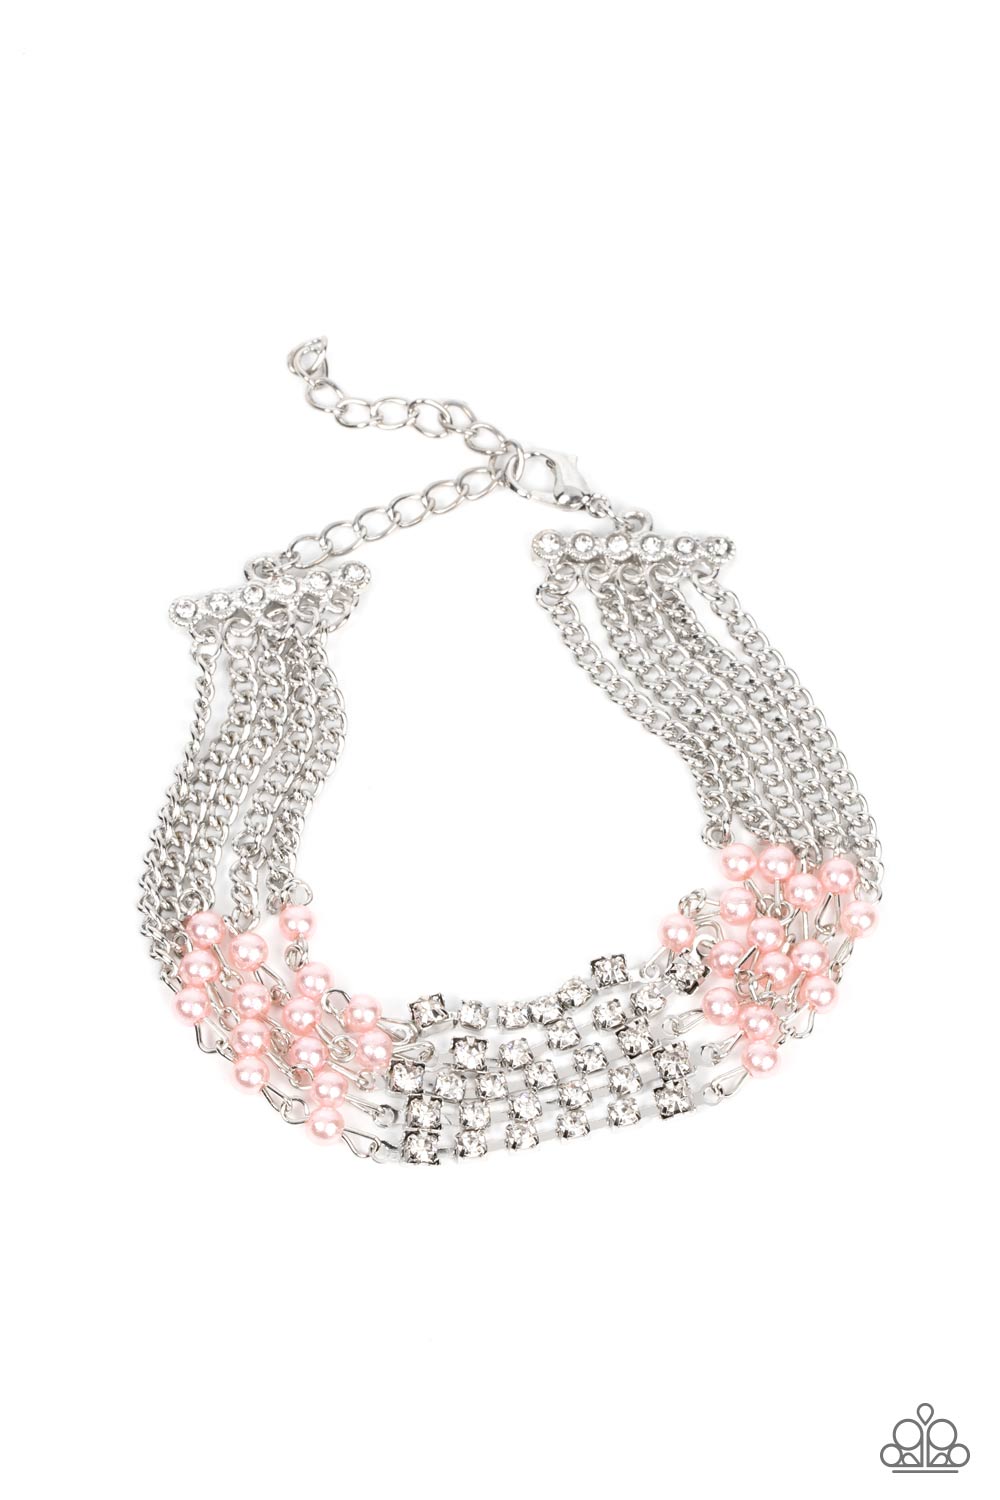 Paparazzi Bracelet  Springtime Trendsetter  Pink  Paparazzi Jewelry   Online Store  DebsJewelryShopcom